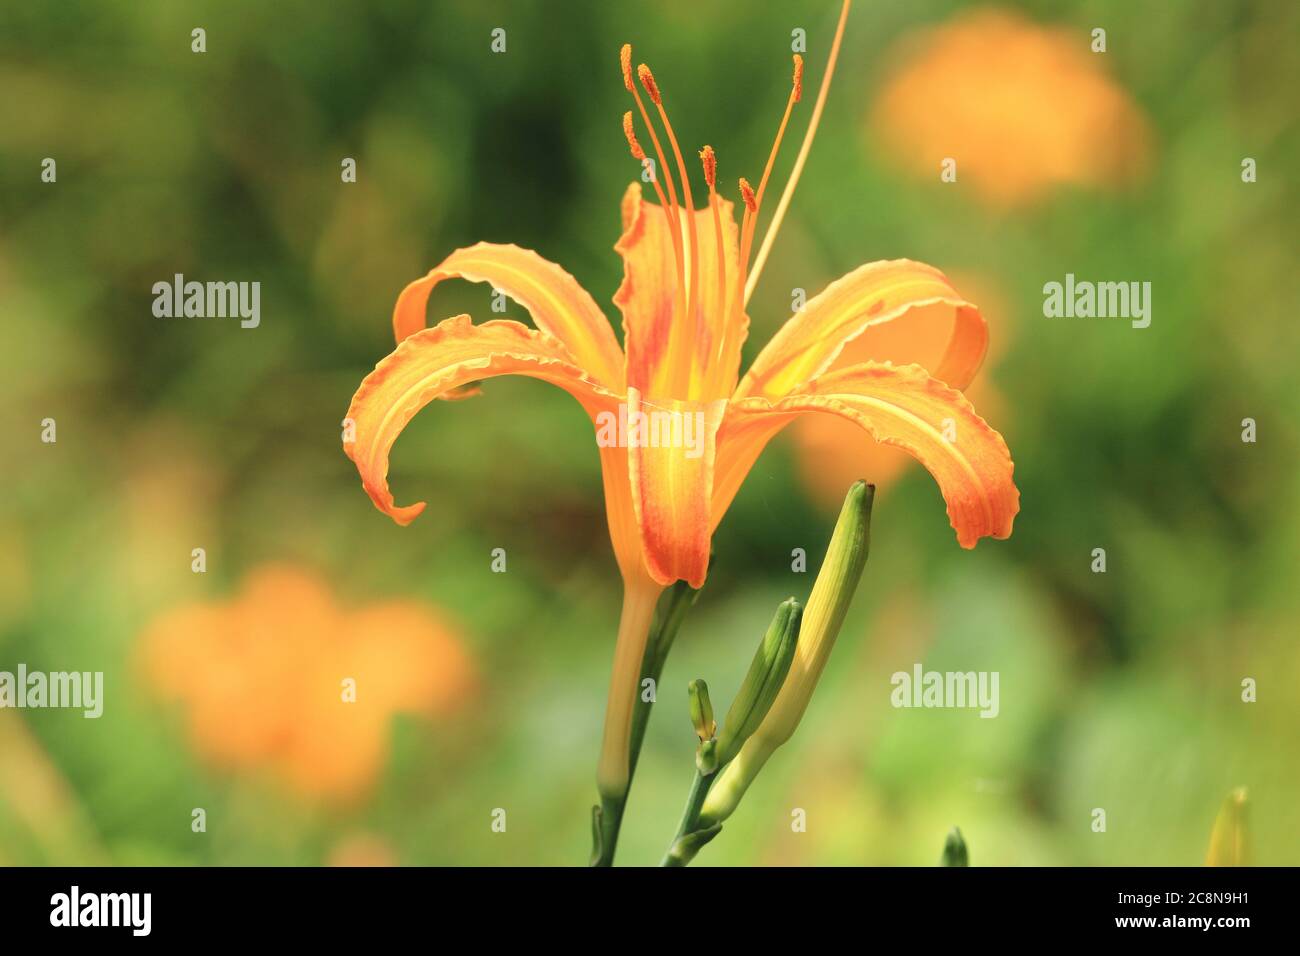 Day lily(Hemerocallis fulva,Orange Day lily) flower and buds,close-up of orange day lily flower blooming in the field Stock Photo